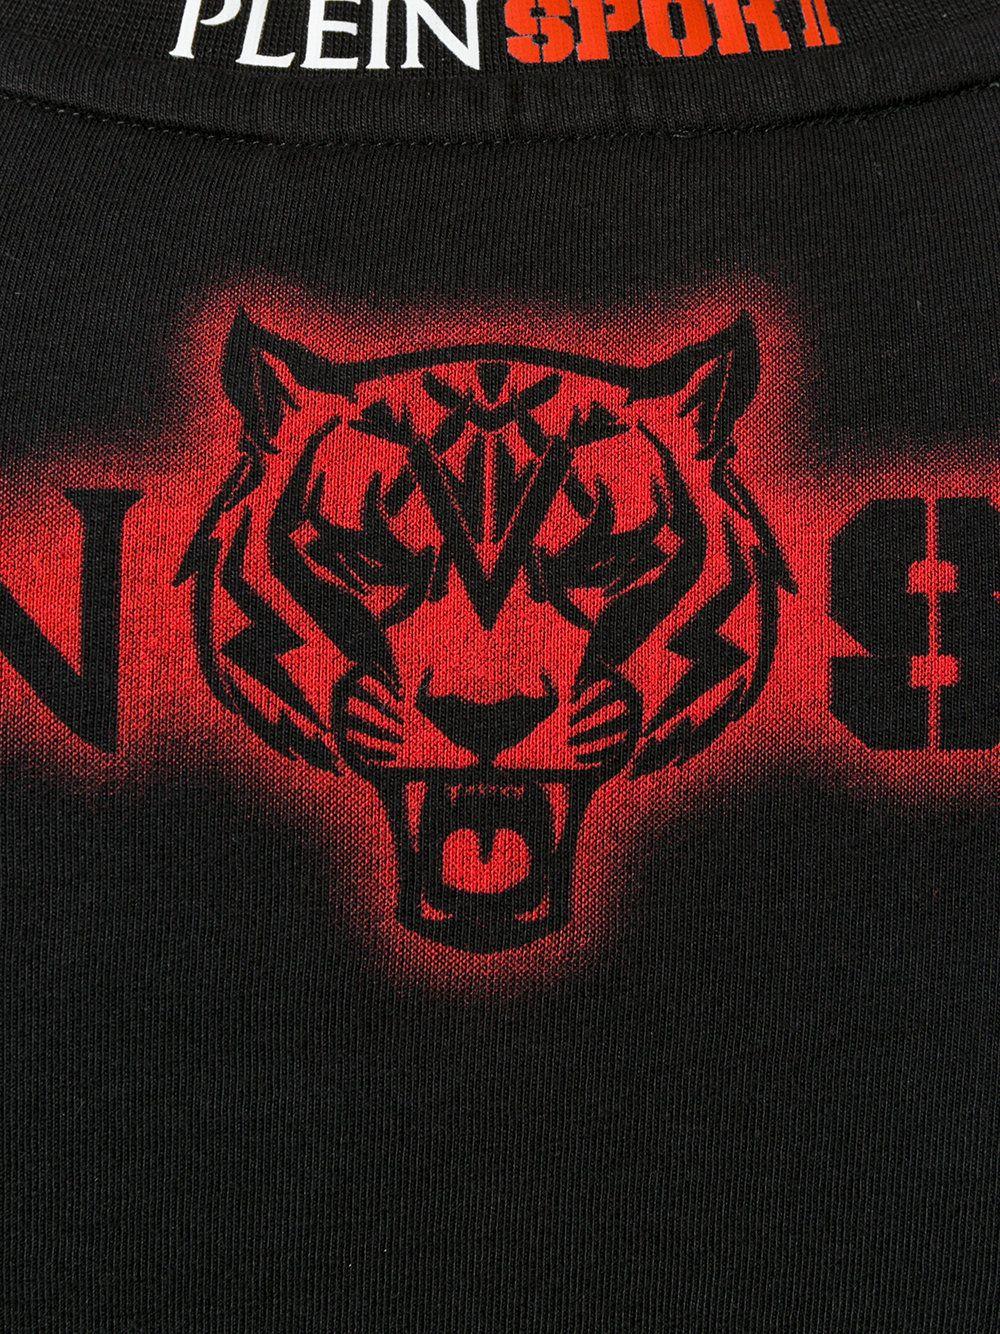 Black and Red T Logo - Plein Sport Logo Motif T Shirt Designer Colour:0213 BLACK RED